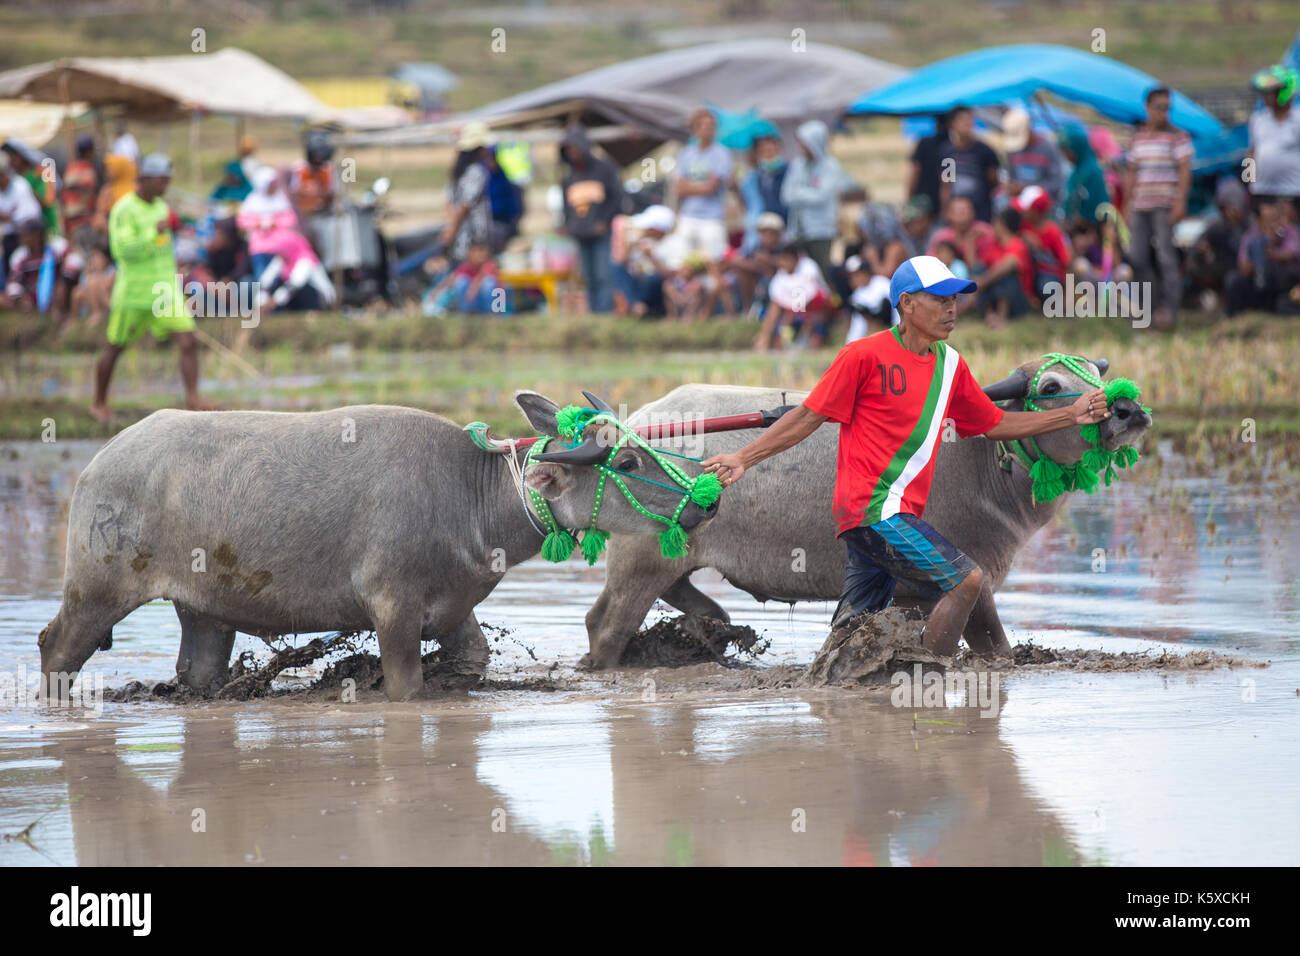 Jereweh, Sumbawa Barat, Indonesia - September 10, 2017: Local buffalo race competition held on Sumbawa in Jereweh, Indonesia on September 10,  2017. Stock Photo